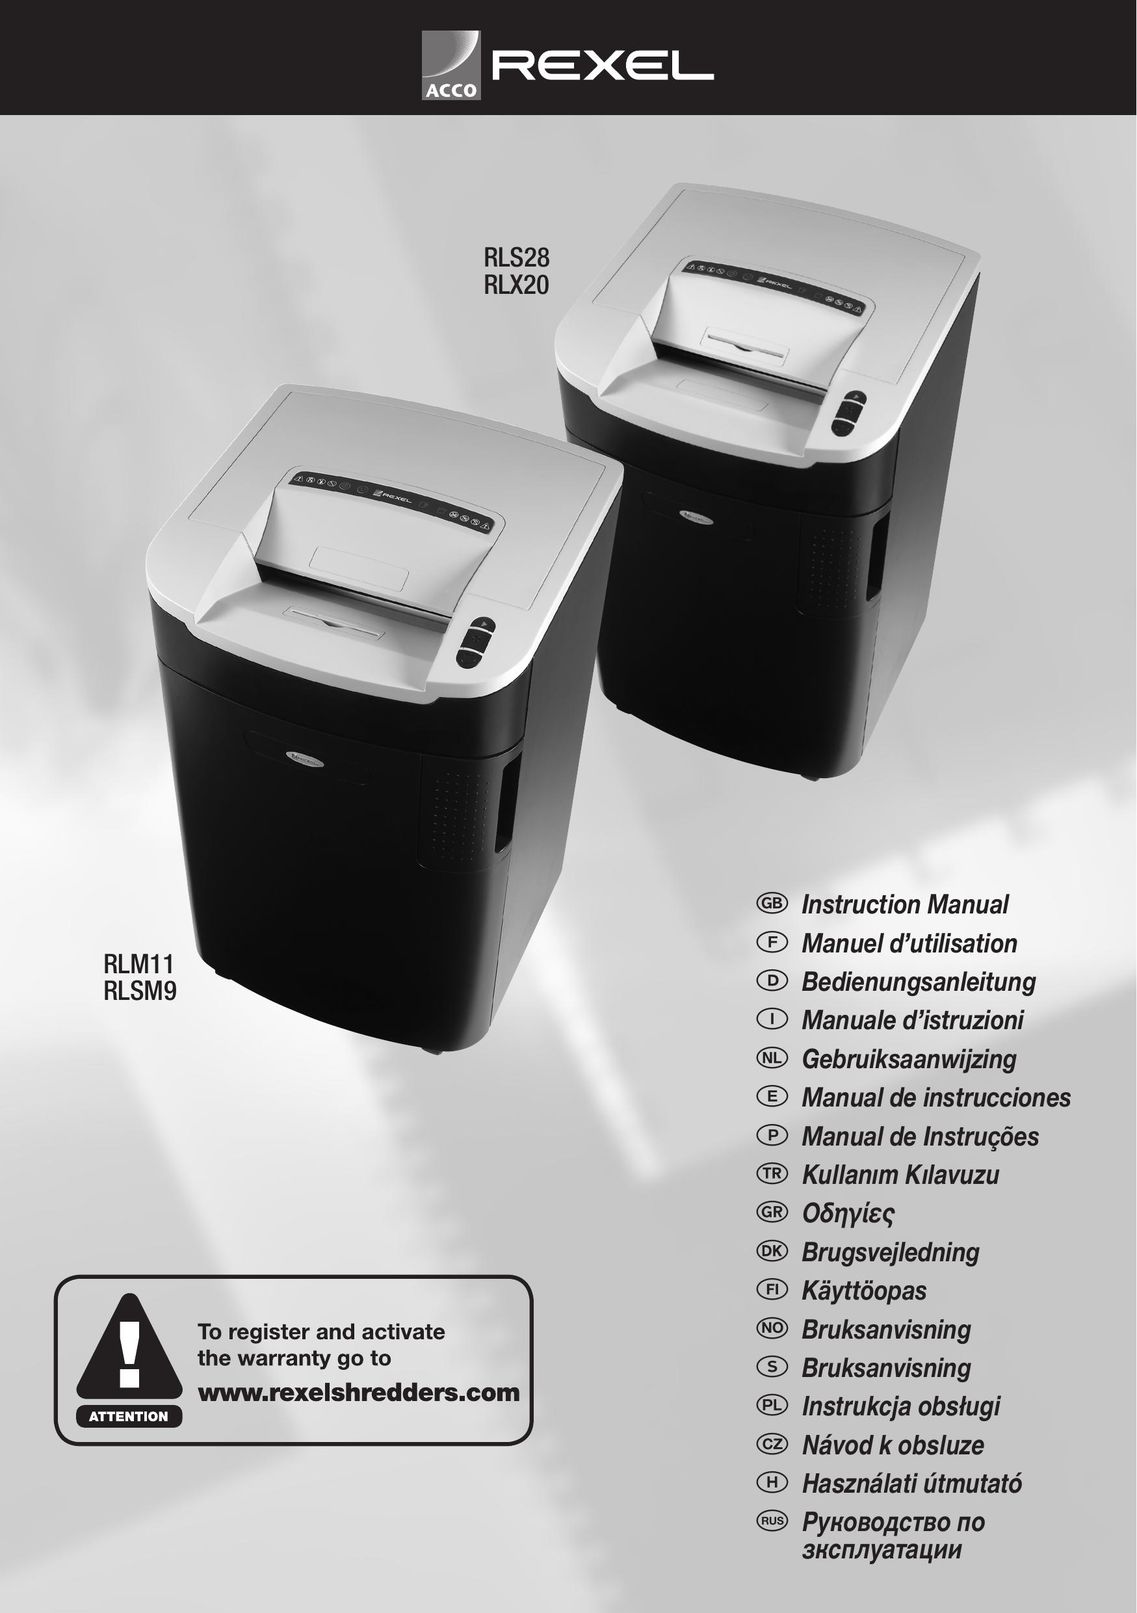 ACCO Brands RLSM9 Paper Shredder User Manual